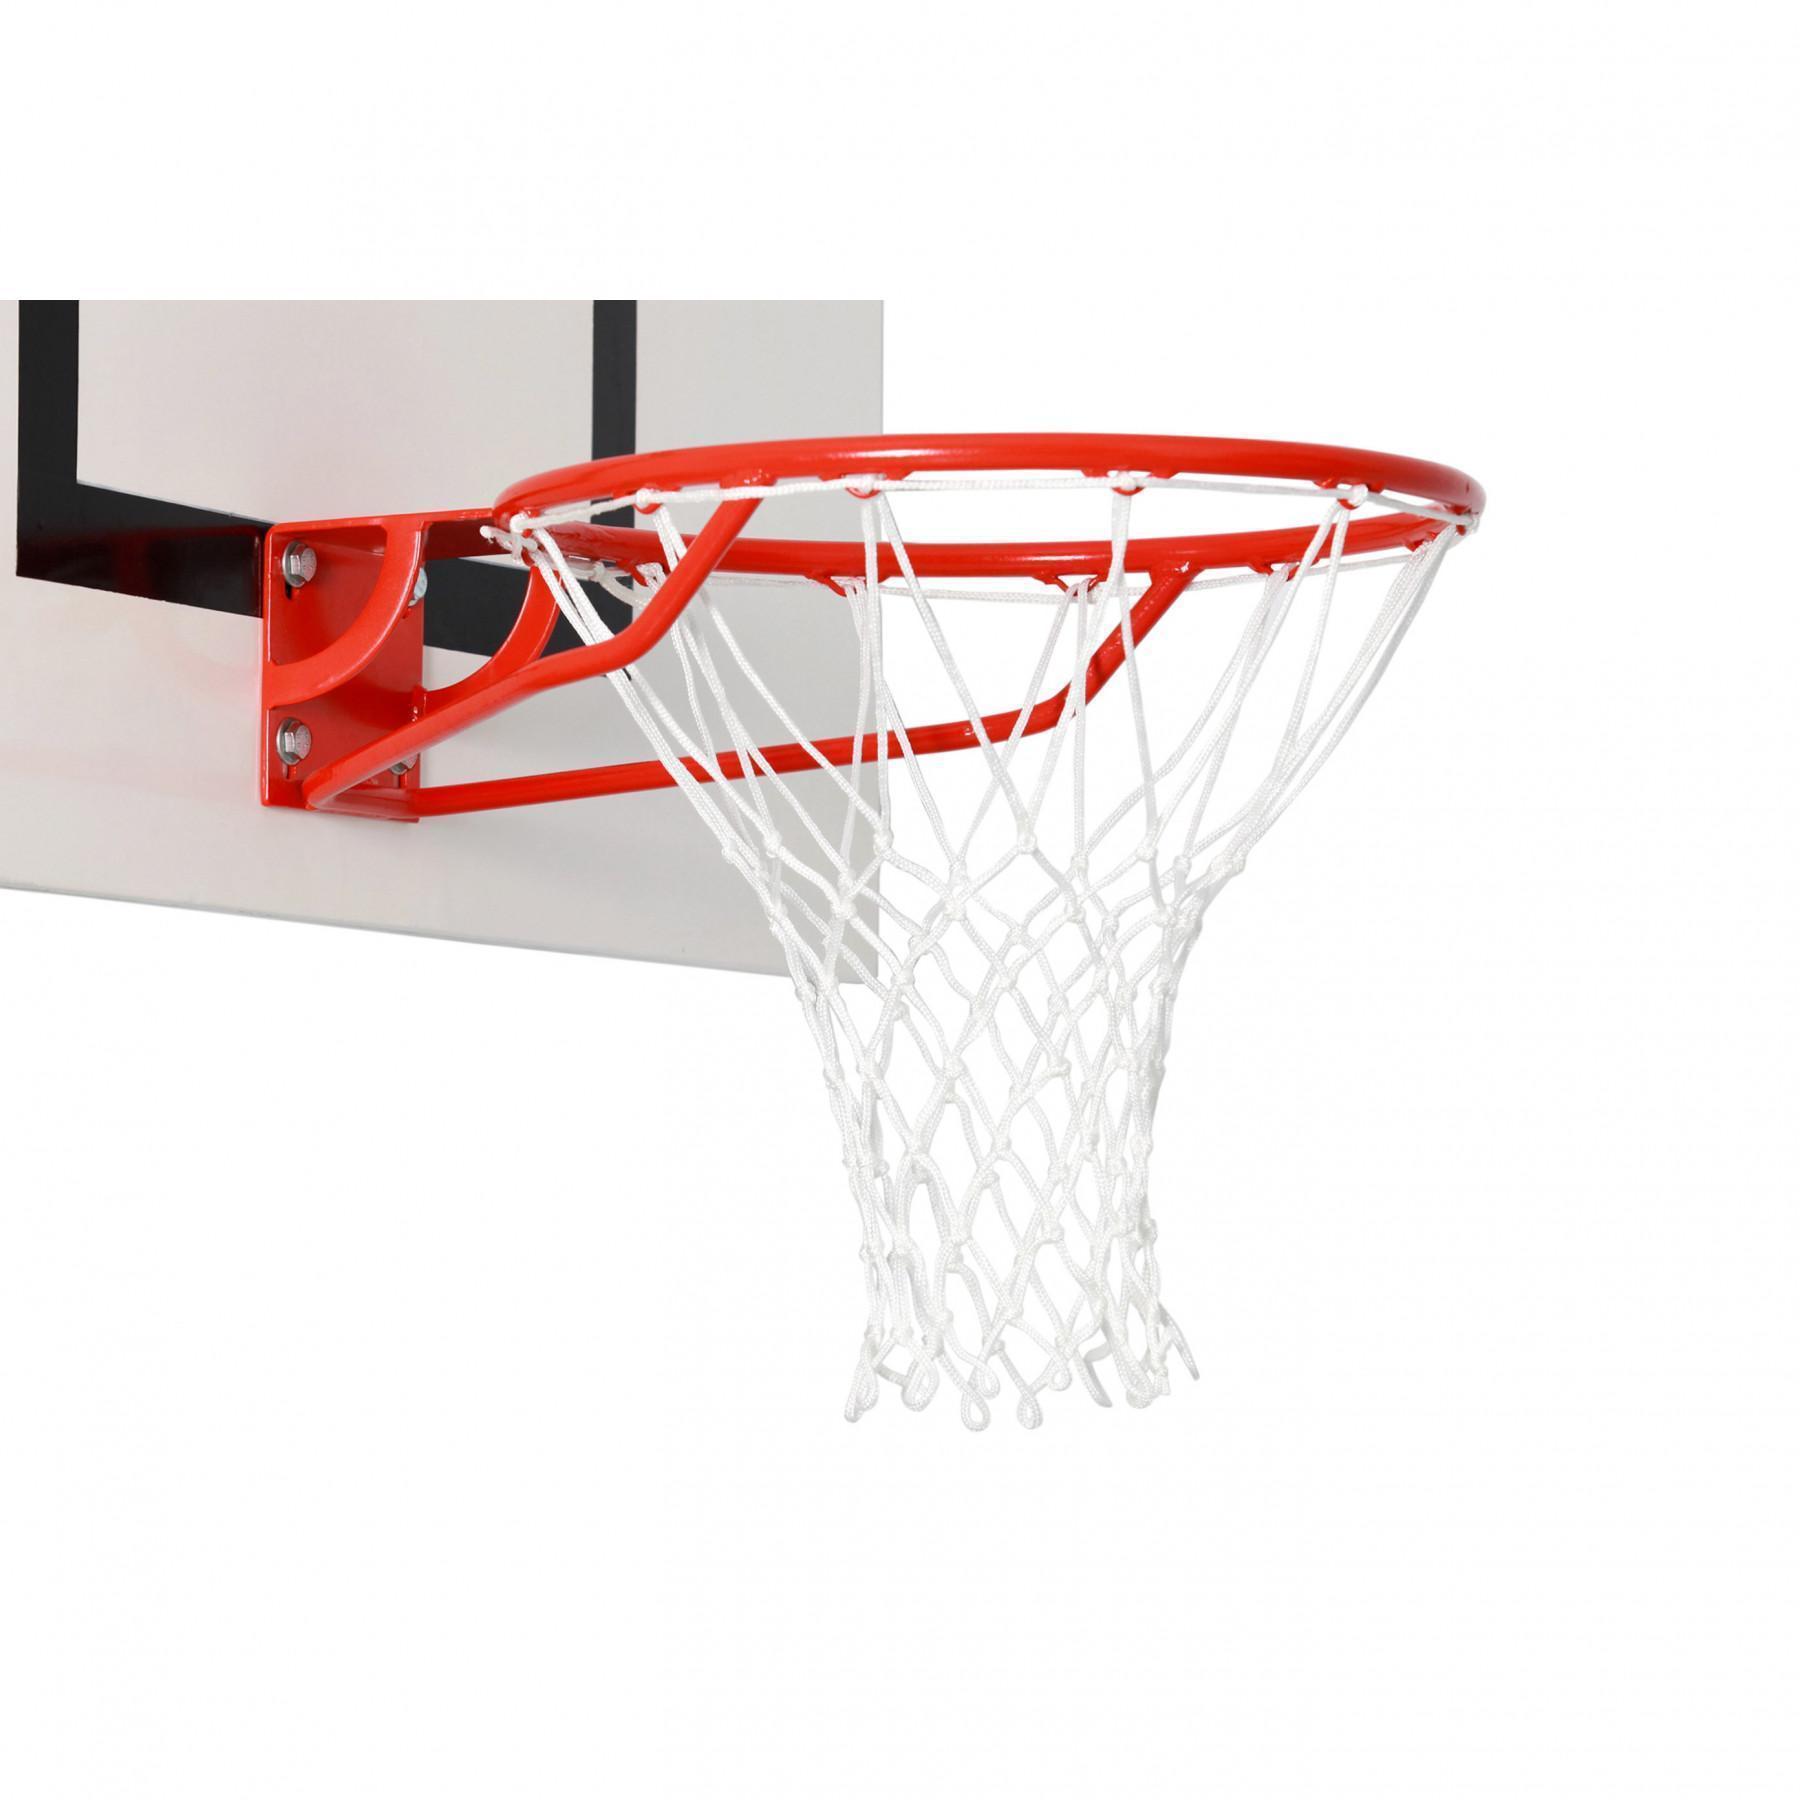 5mm basketbalnet PowerShot